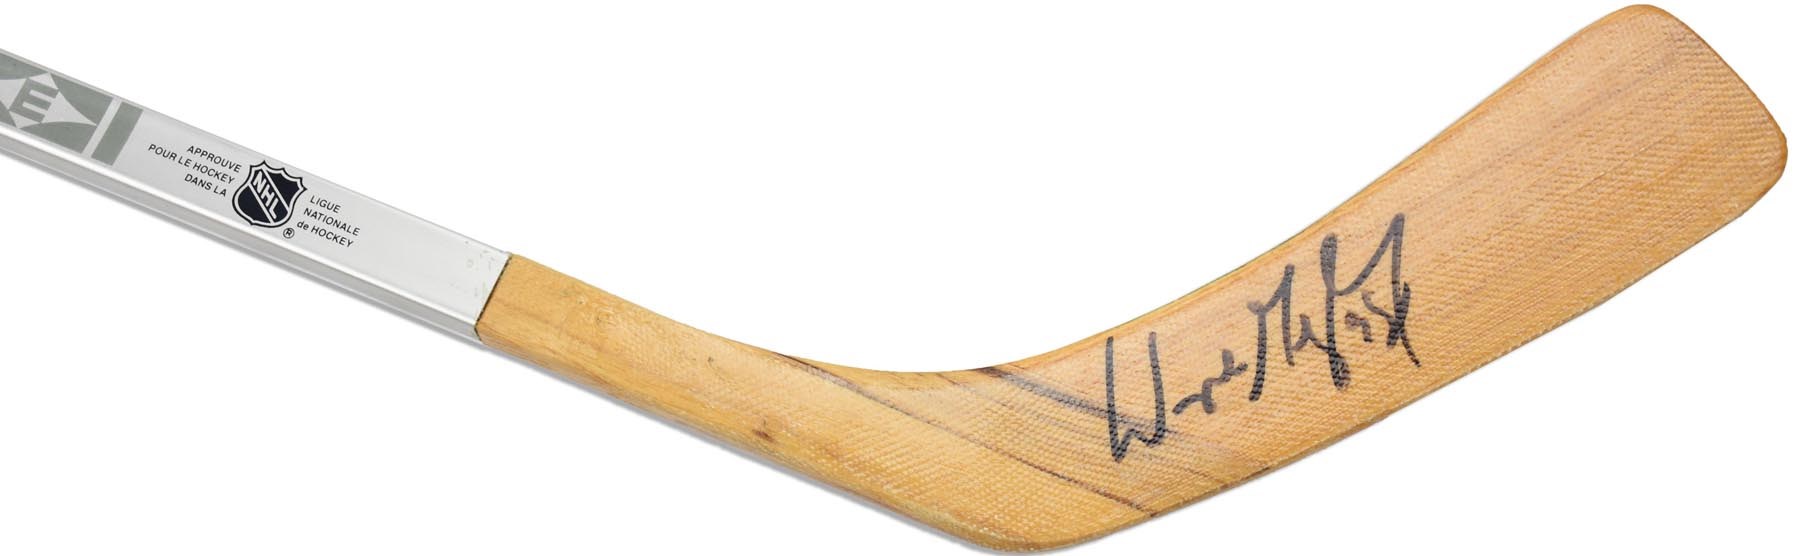 Hockey - Wayne Gretzky Signed Stick